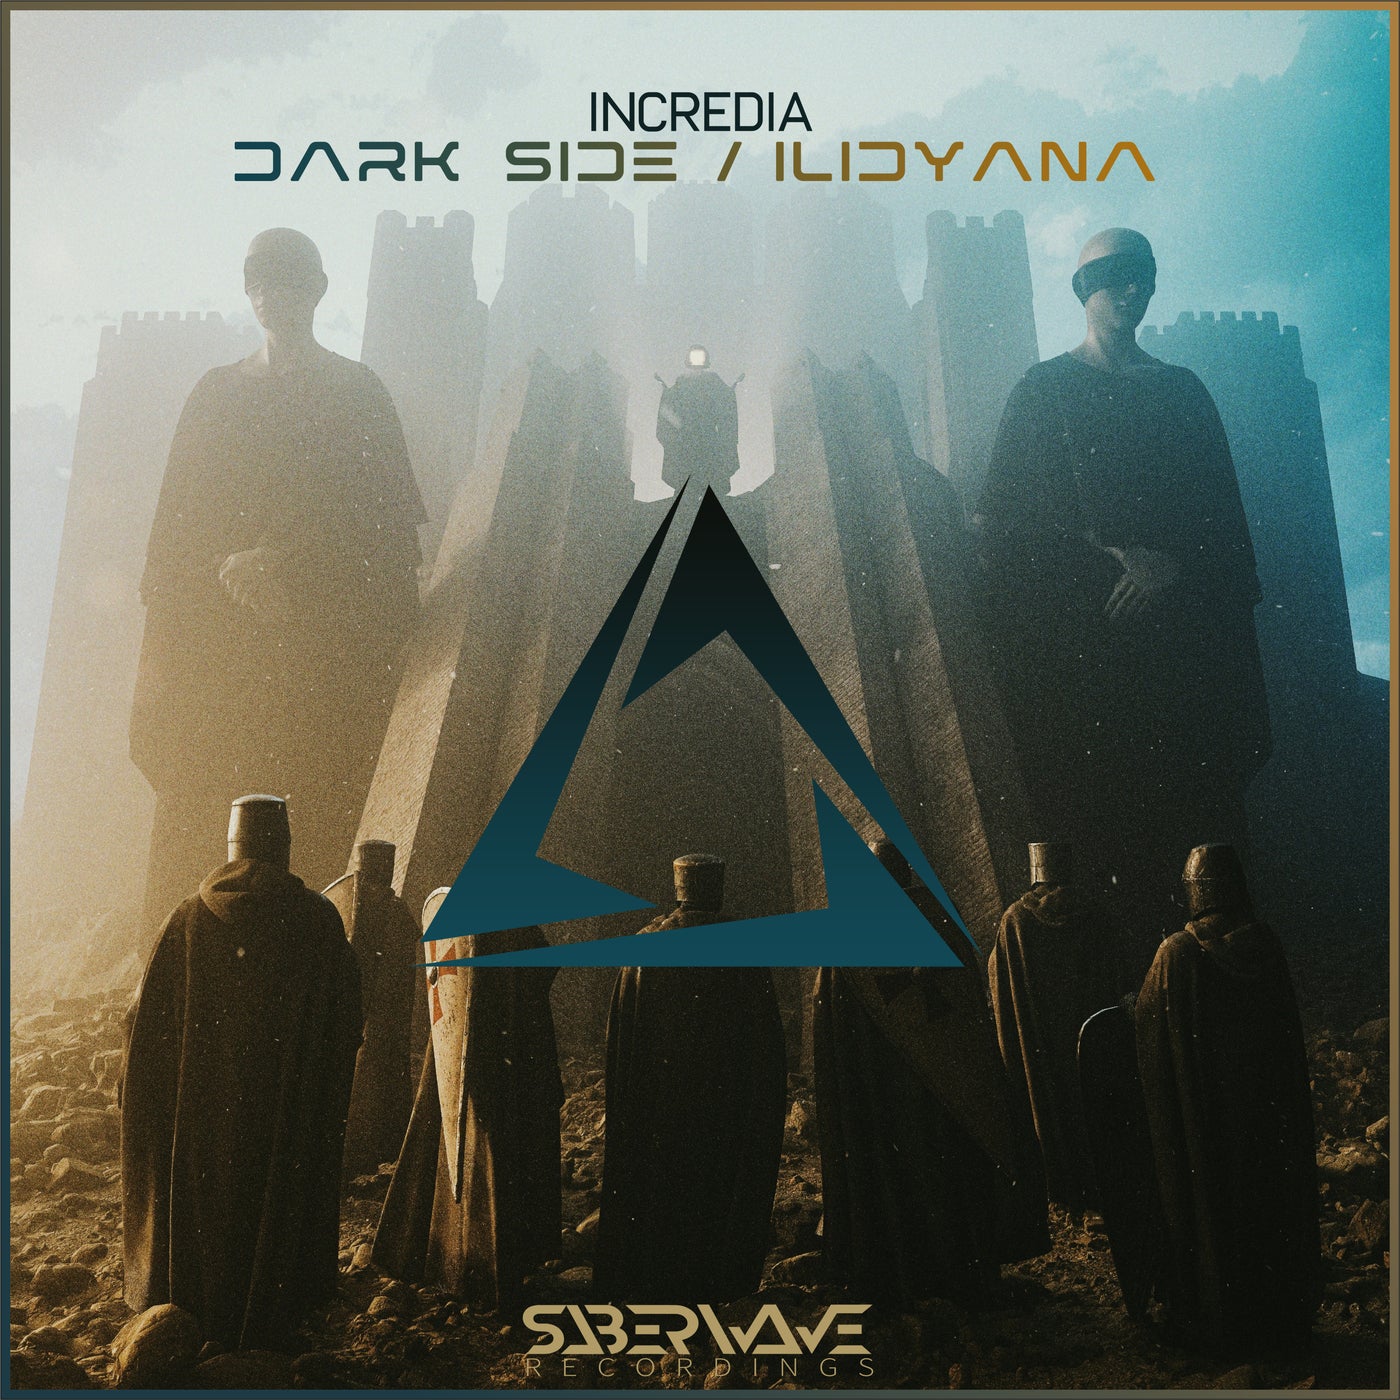 Dark Side/ILIDYANA